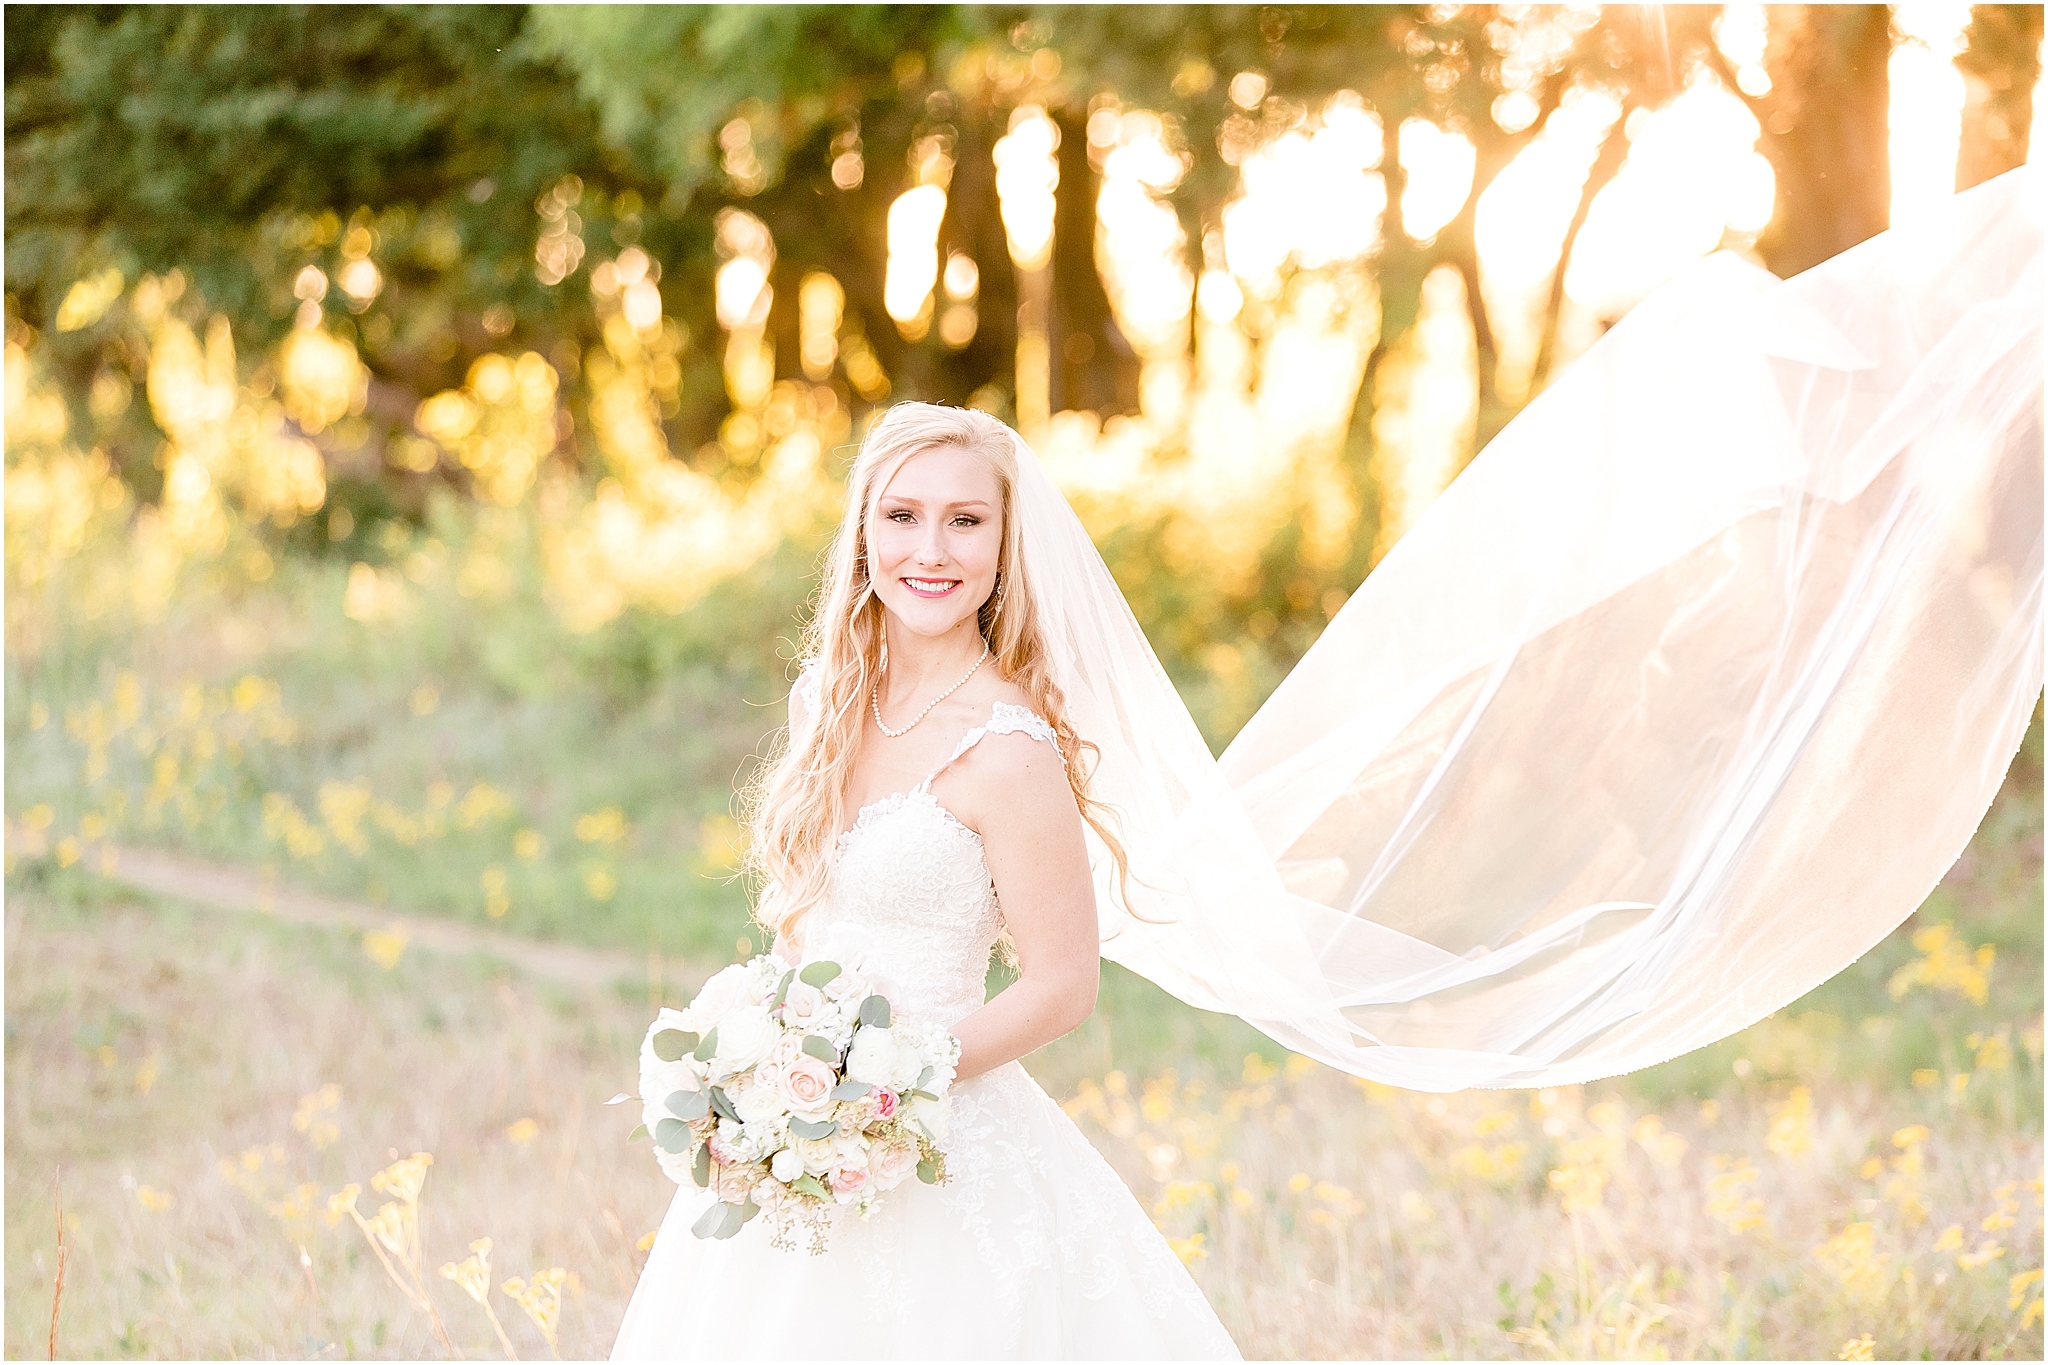 Bridal Session Ideas by Dallas Wedding Photographer Jillian Hogan Photography 